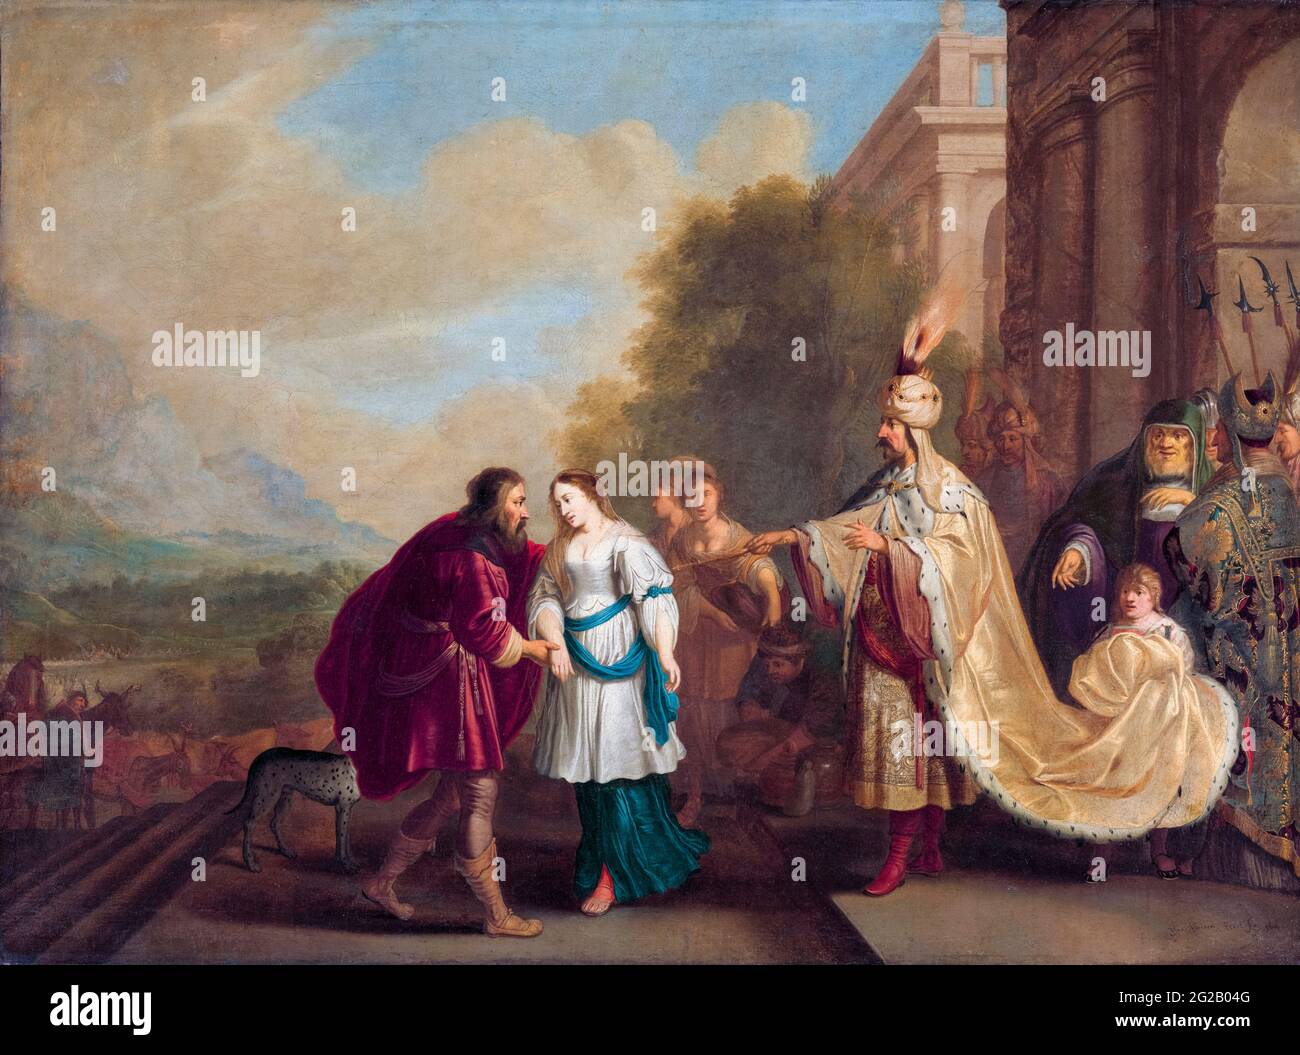 Il Faraone restituisce Sarah ad Abramo, dipinto di Isacco Isaacsz, 1640 Foto Stock